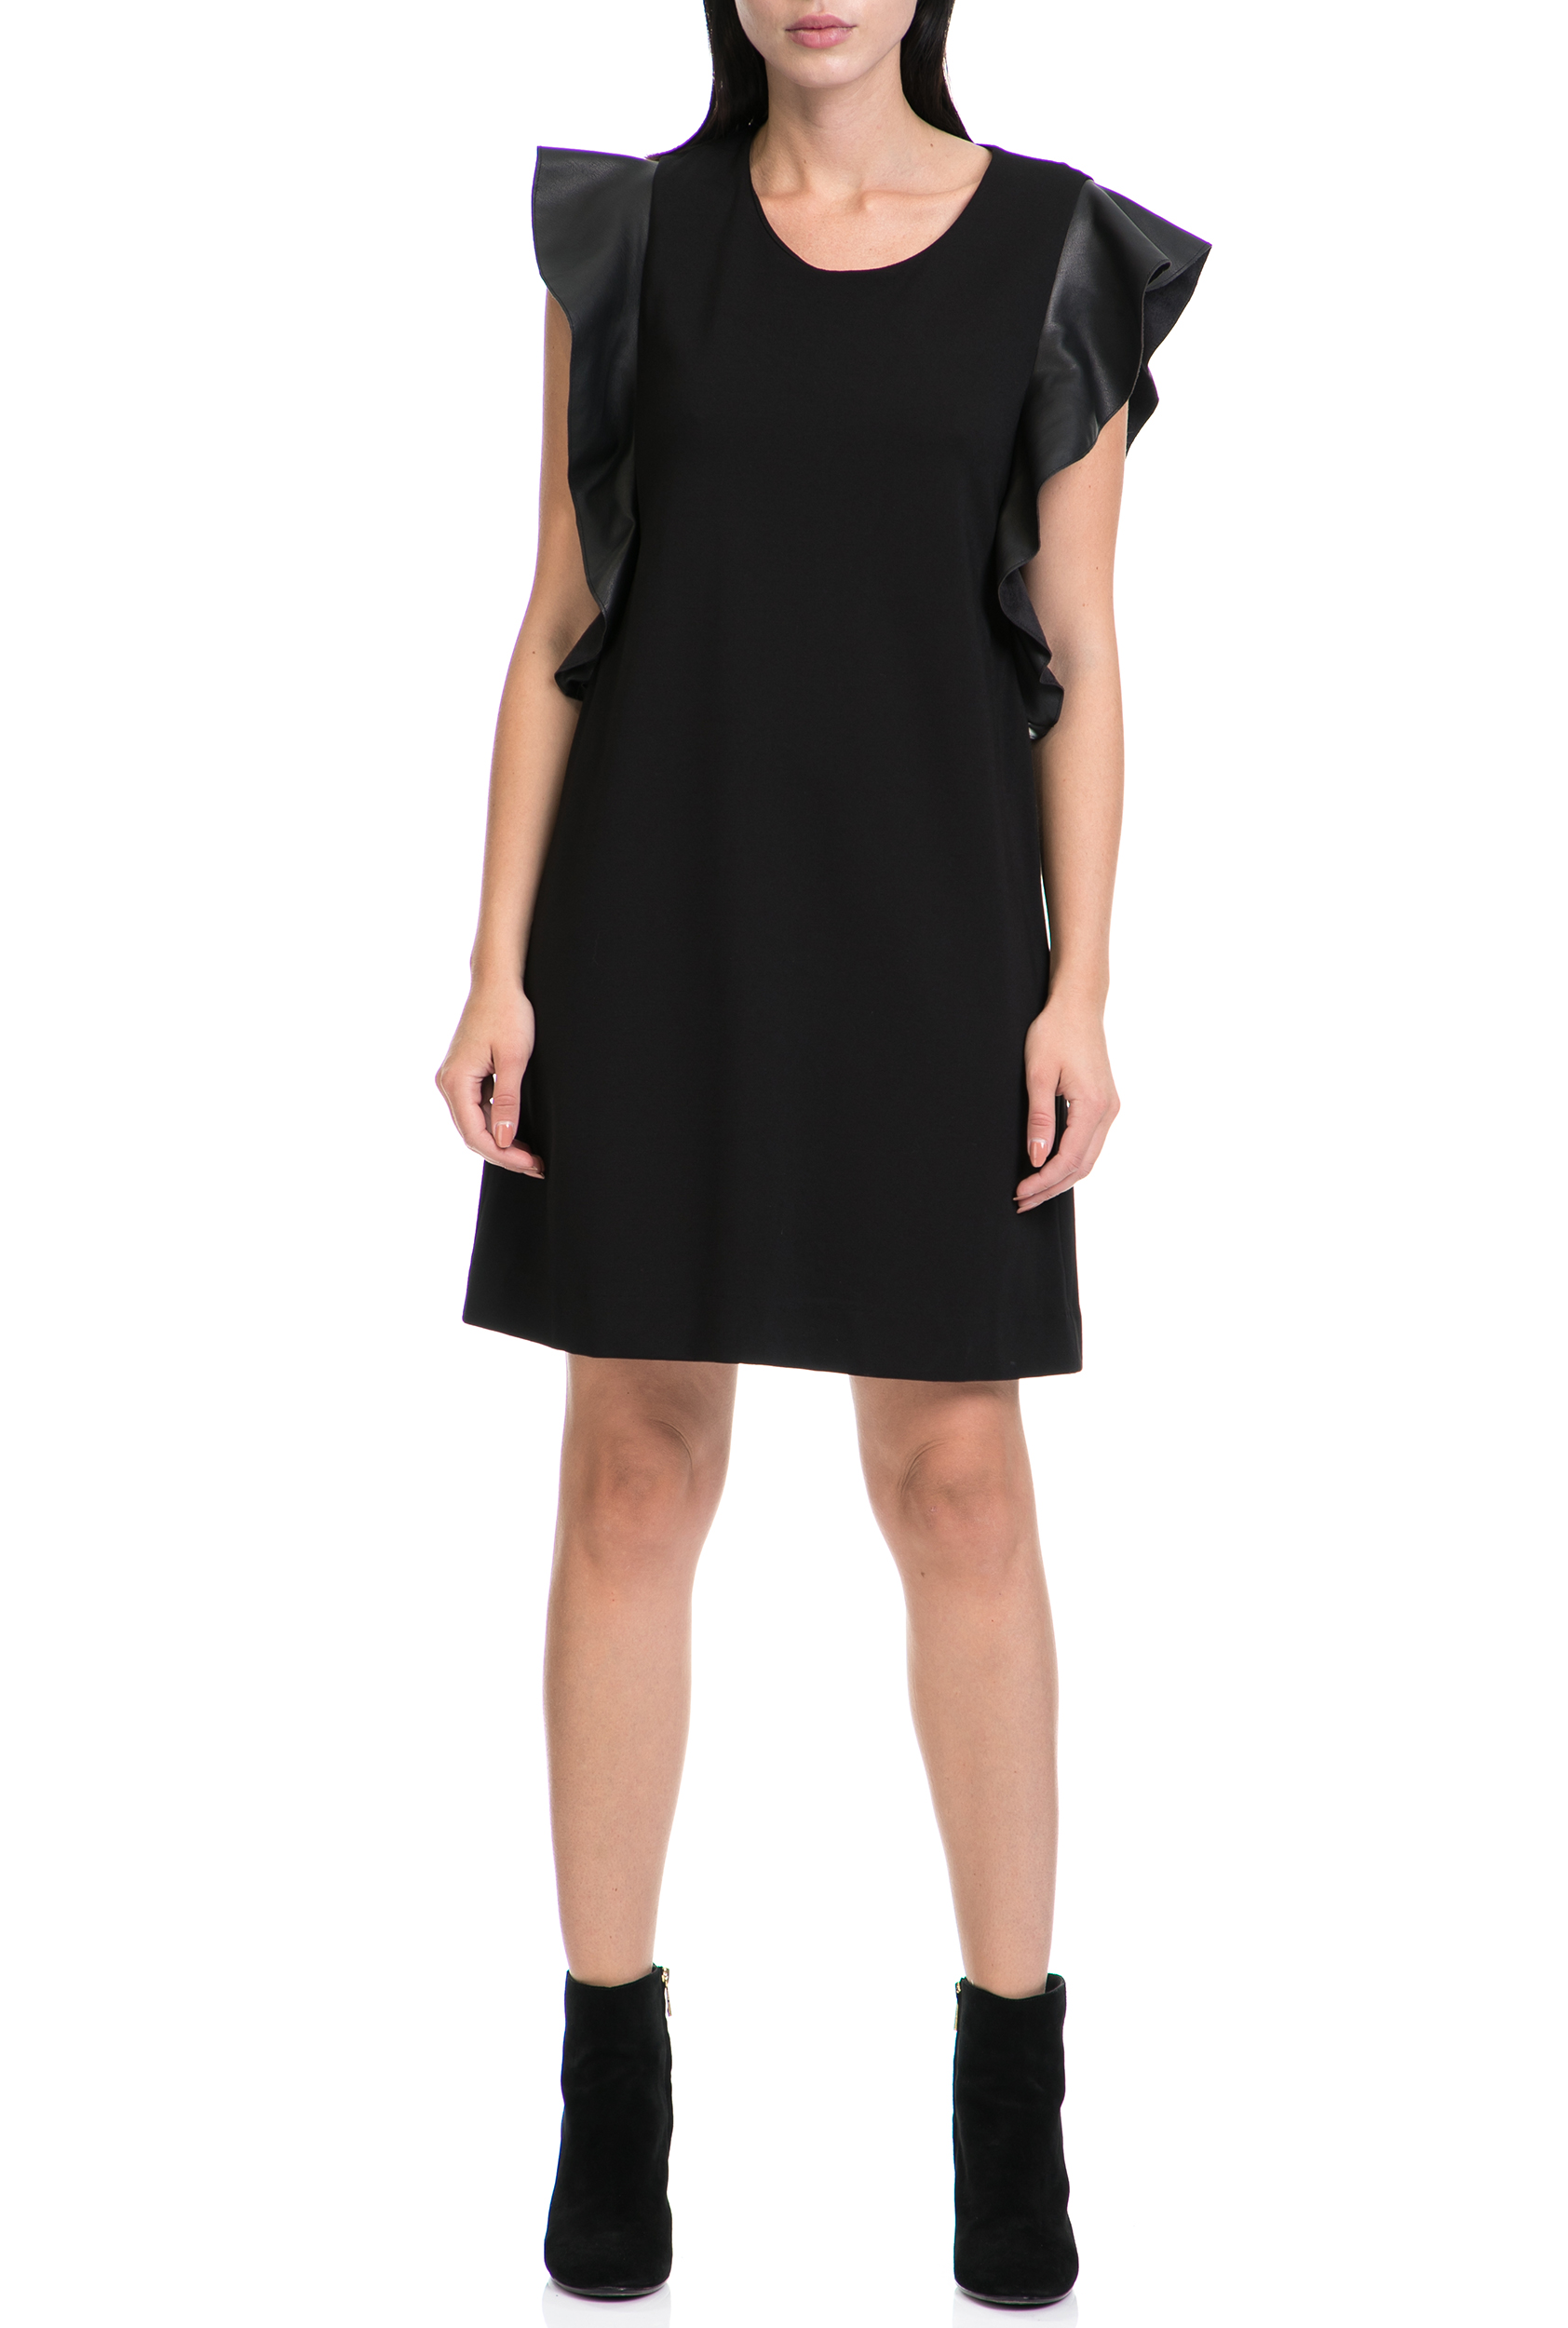 GAS – Γυναικείο φόρεμα ROSES GAS μαύρο 1577259.0-0071